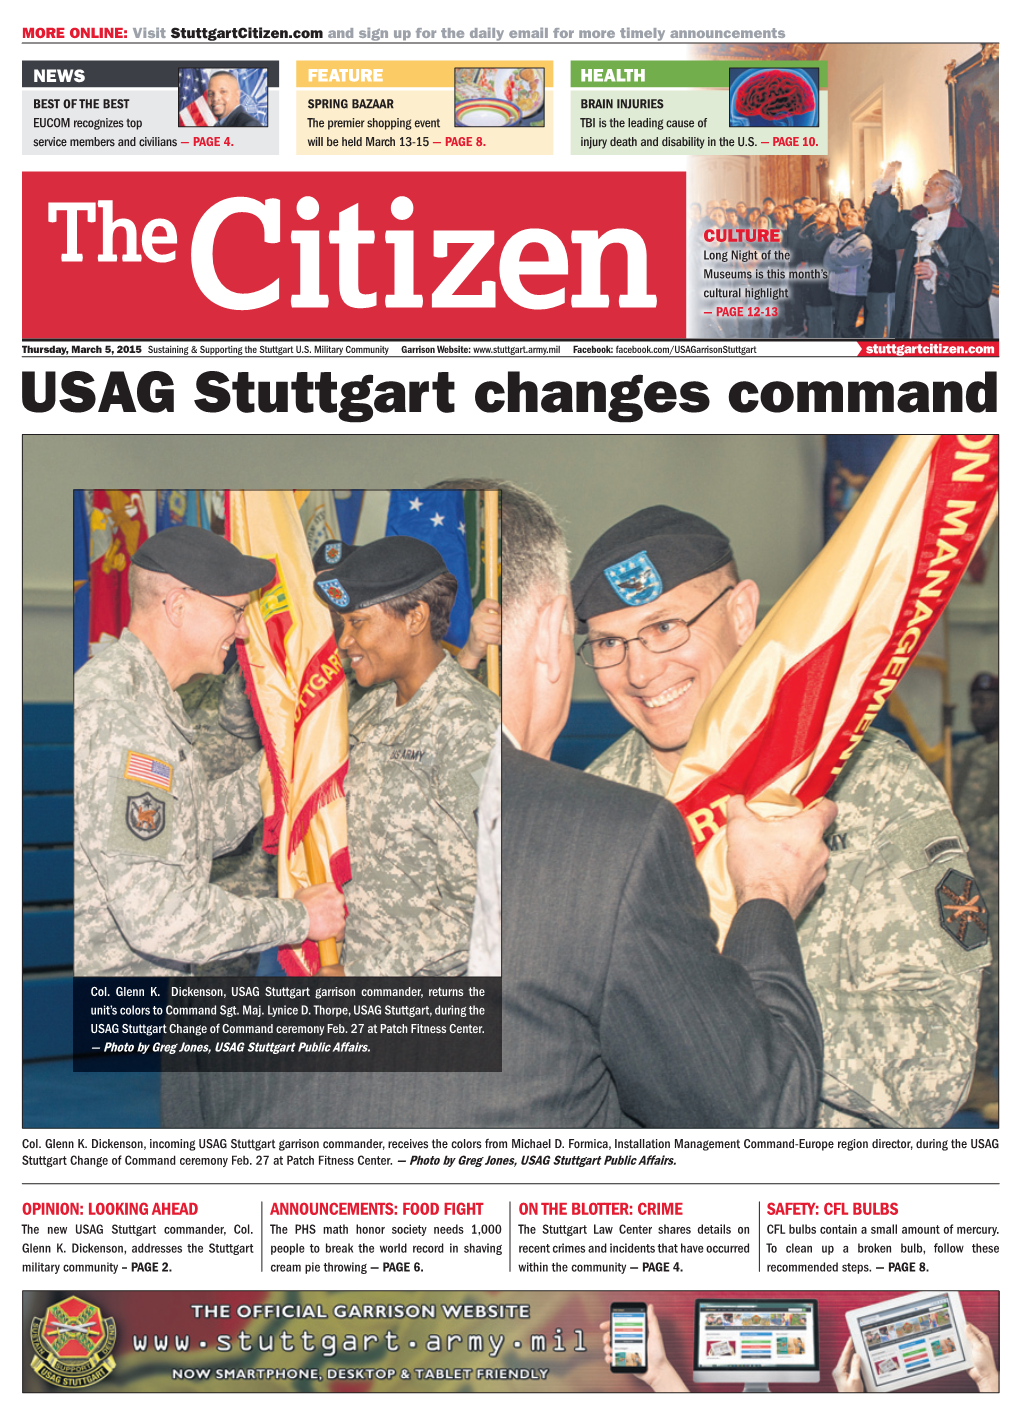 USAG Stuttgart Changes Command